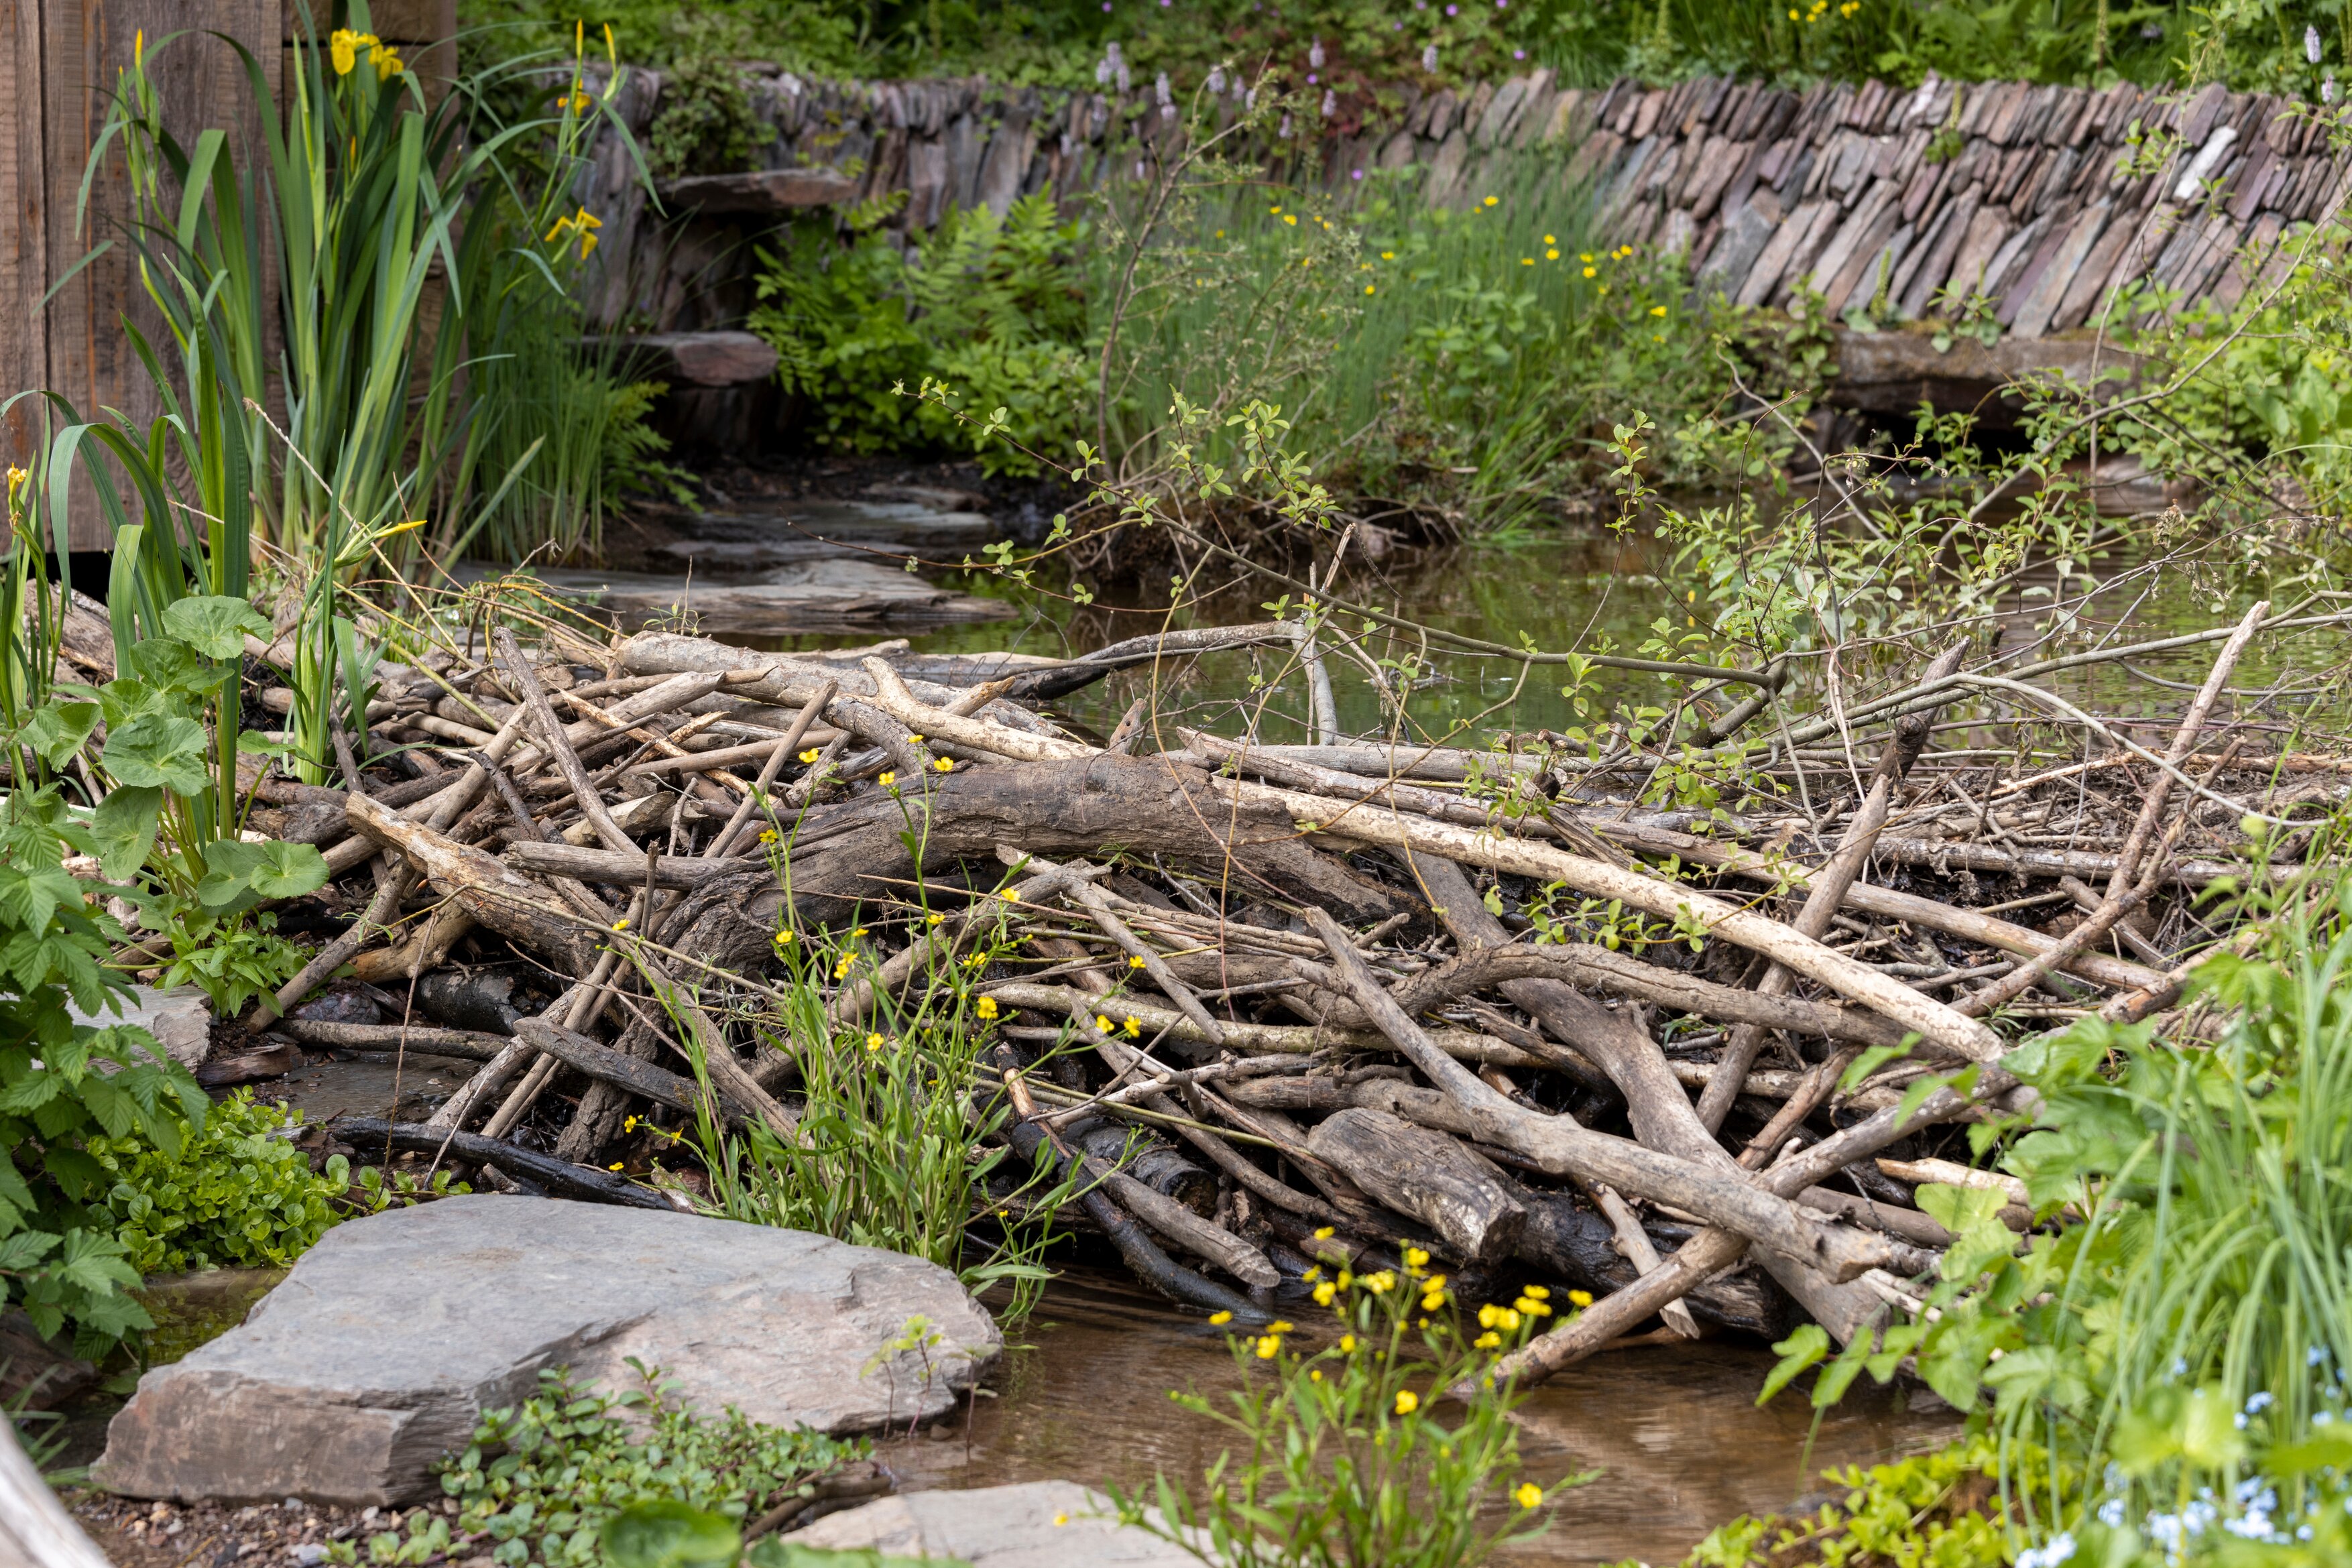 The recreation of a beaver dam in the Rewilding Britain Landscape garden (RHS/PA)